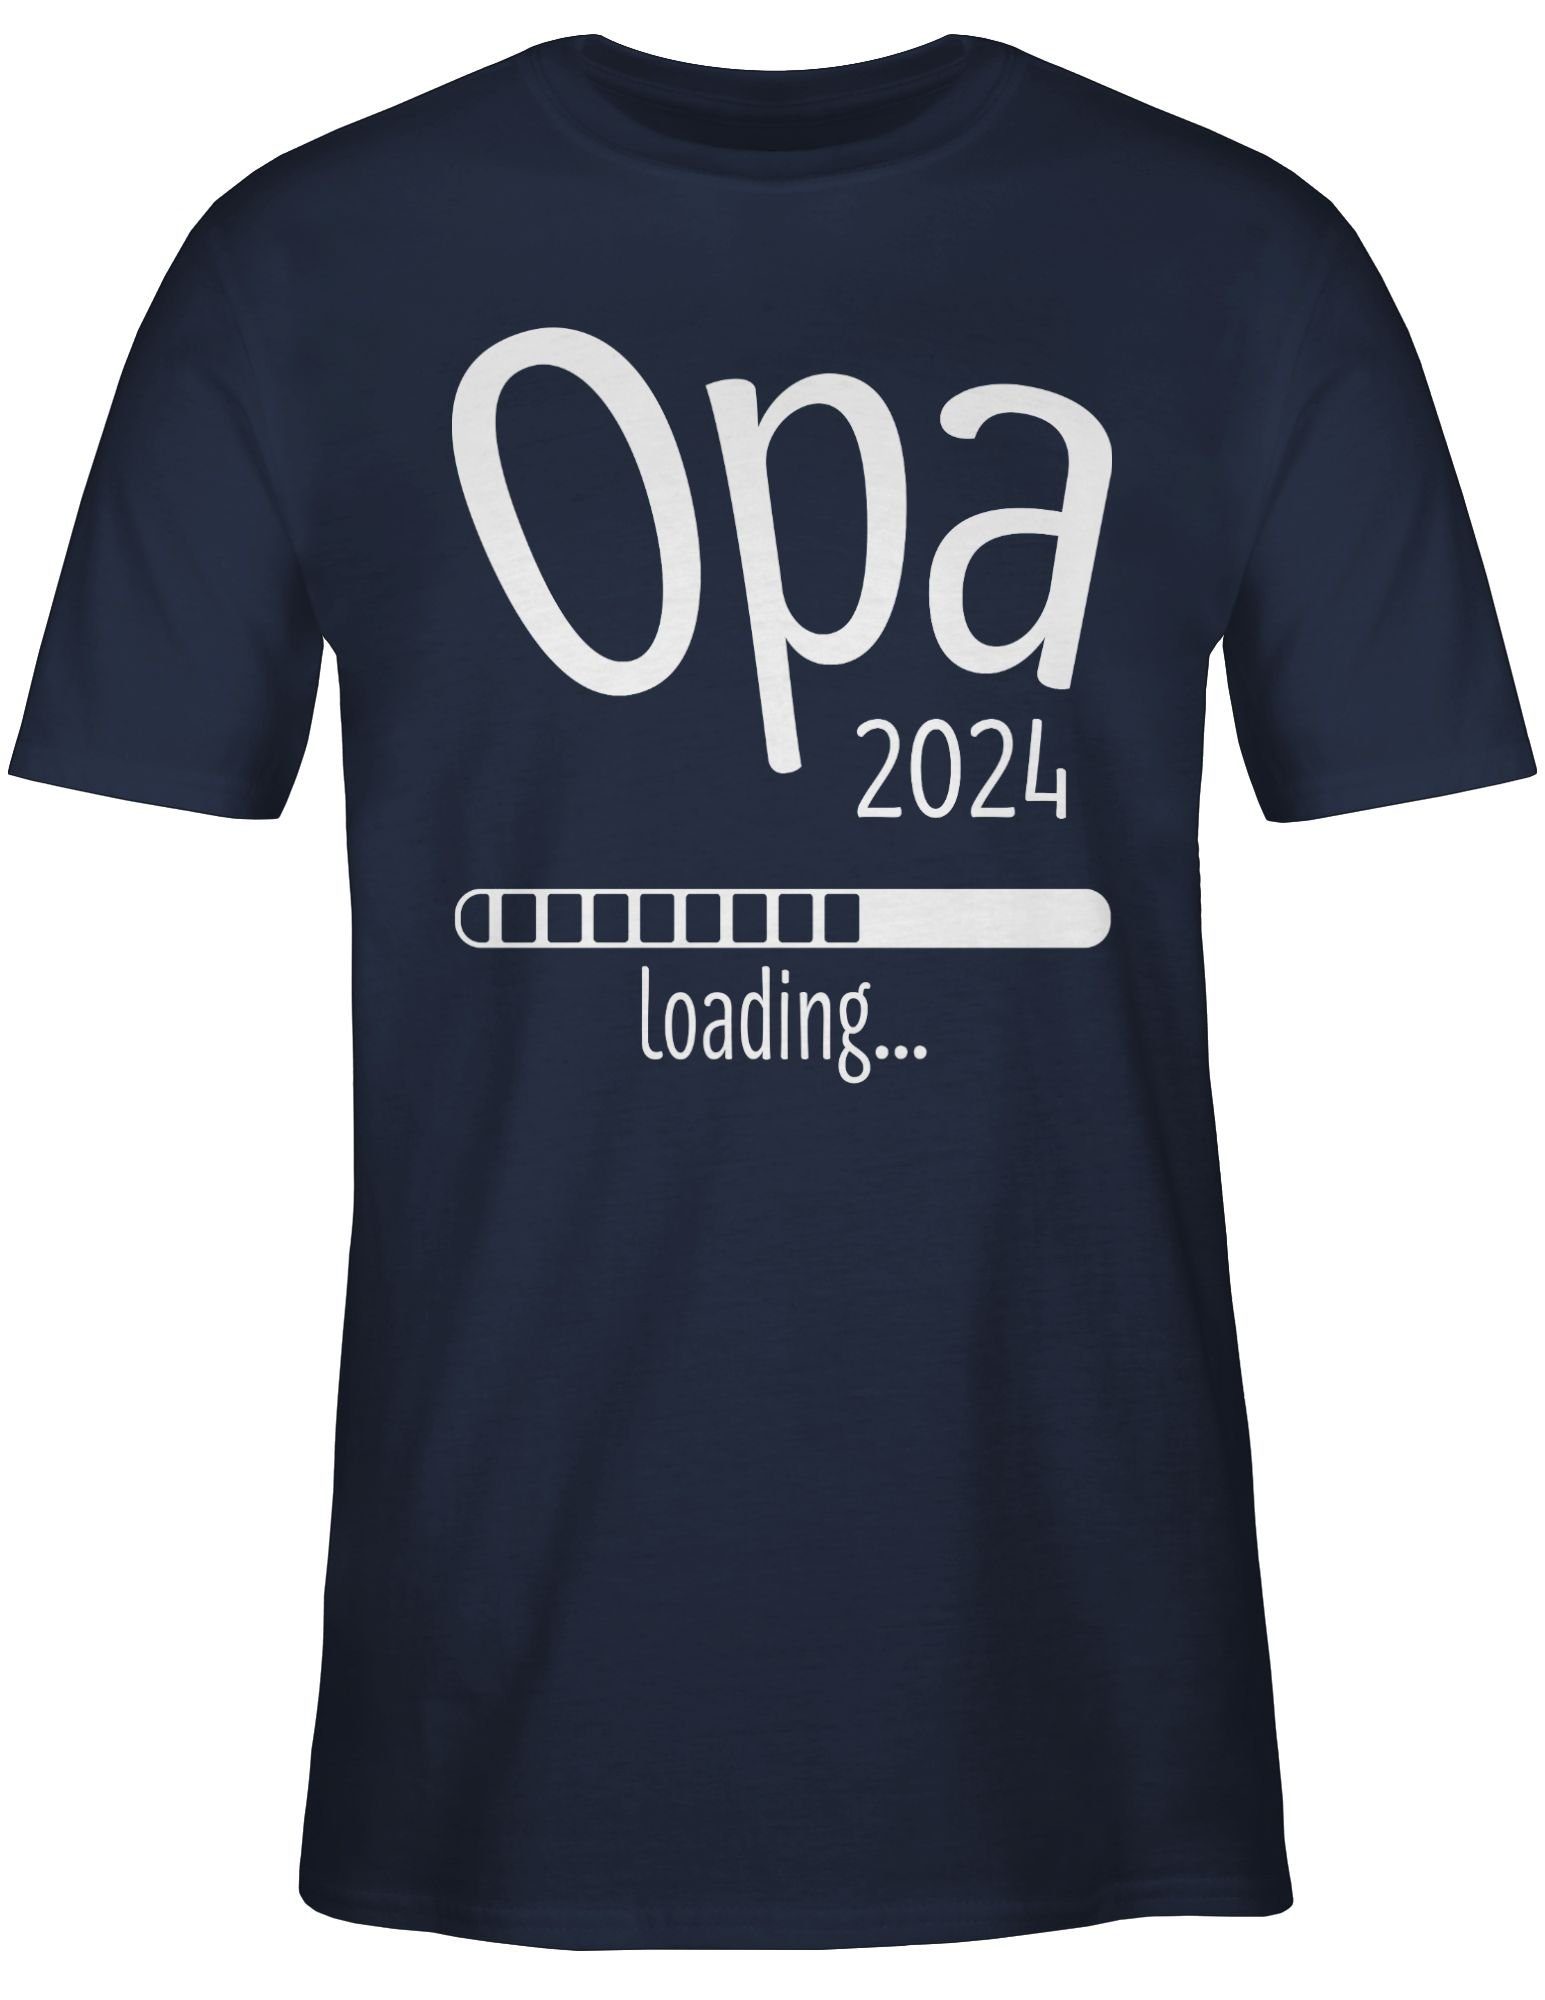 Blau T-Shirt loading Shirtracer Opa 2024 Opa 2 Geschenke Navy